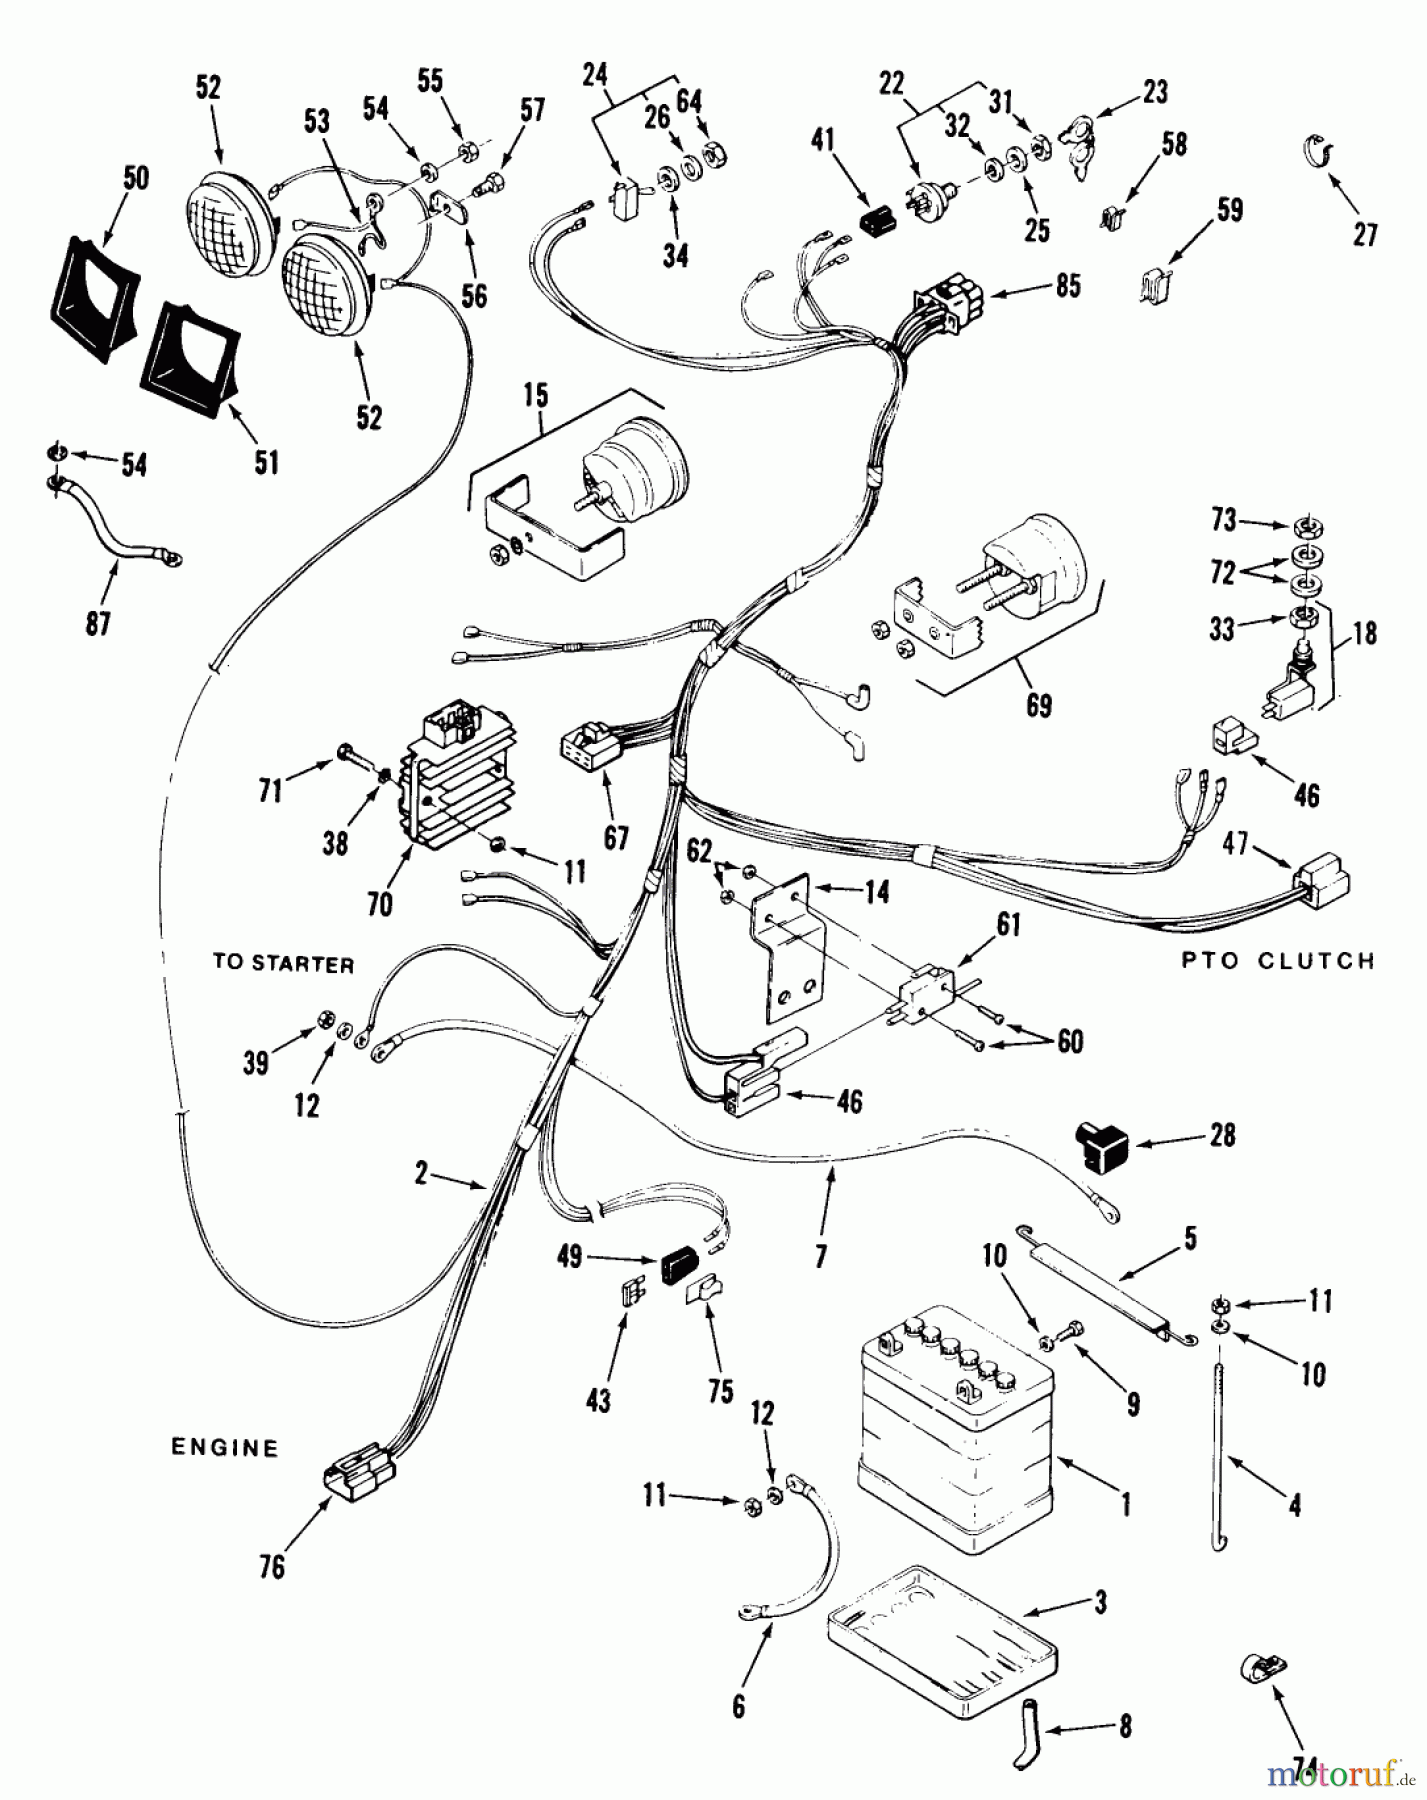  Toro Neu Mowers, Lawn & Garden Tractor Seite 2 R2-17K501 (227-5) - Toro 227-5 Tractor, 1990 ELECTRICAL SYSTEM